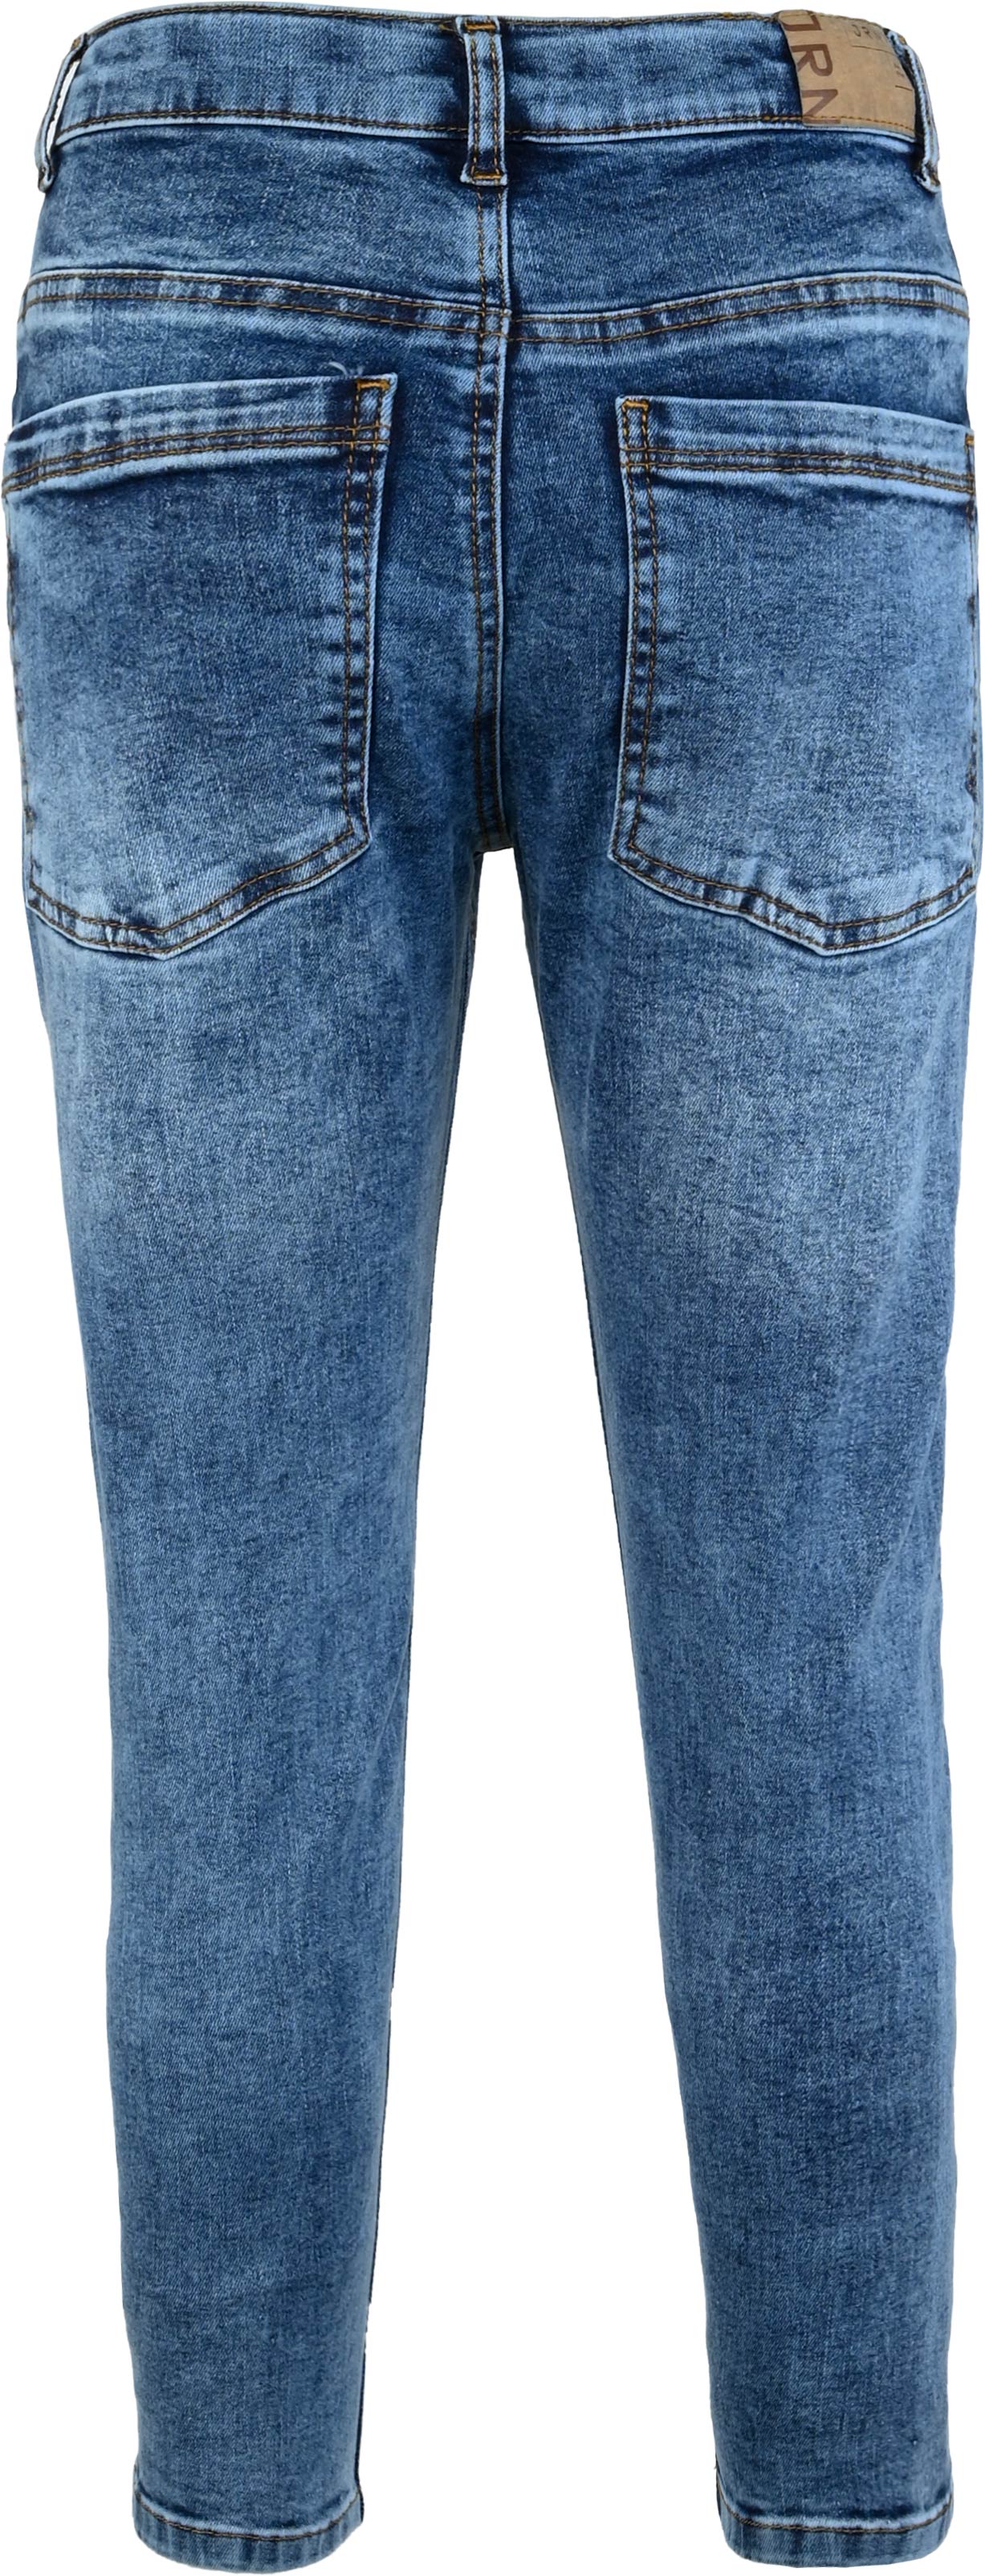 2900-JRNY Loose Fit Jeans Boys, verfügbar in Normal